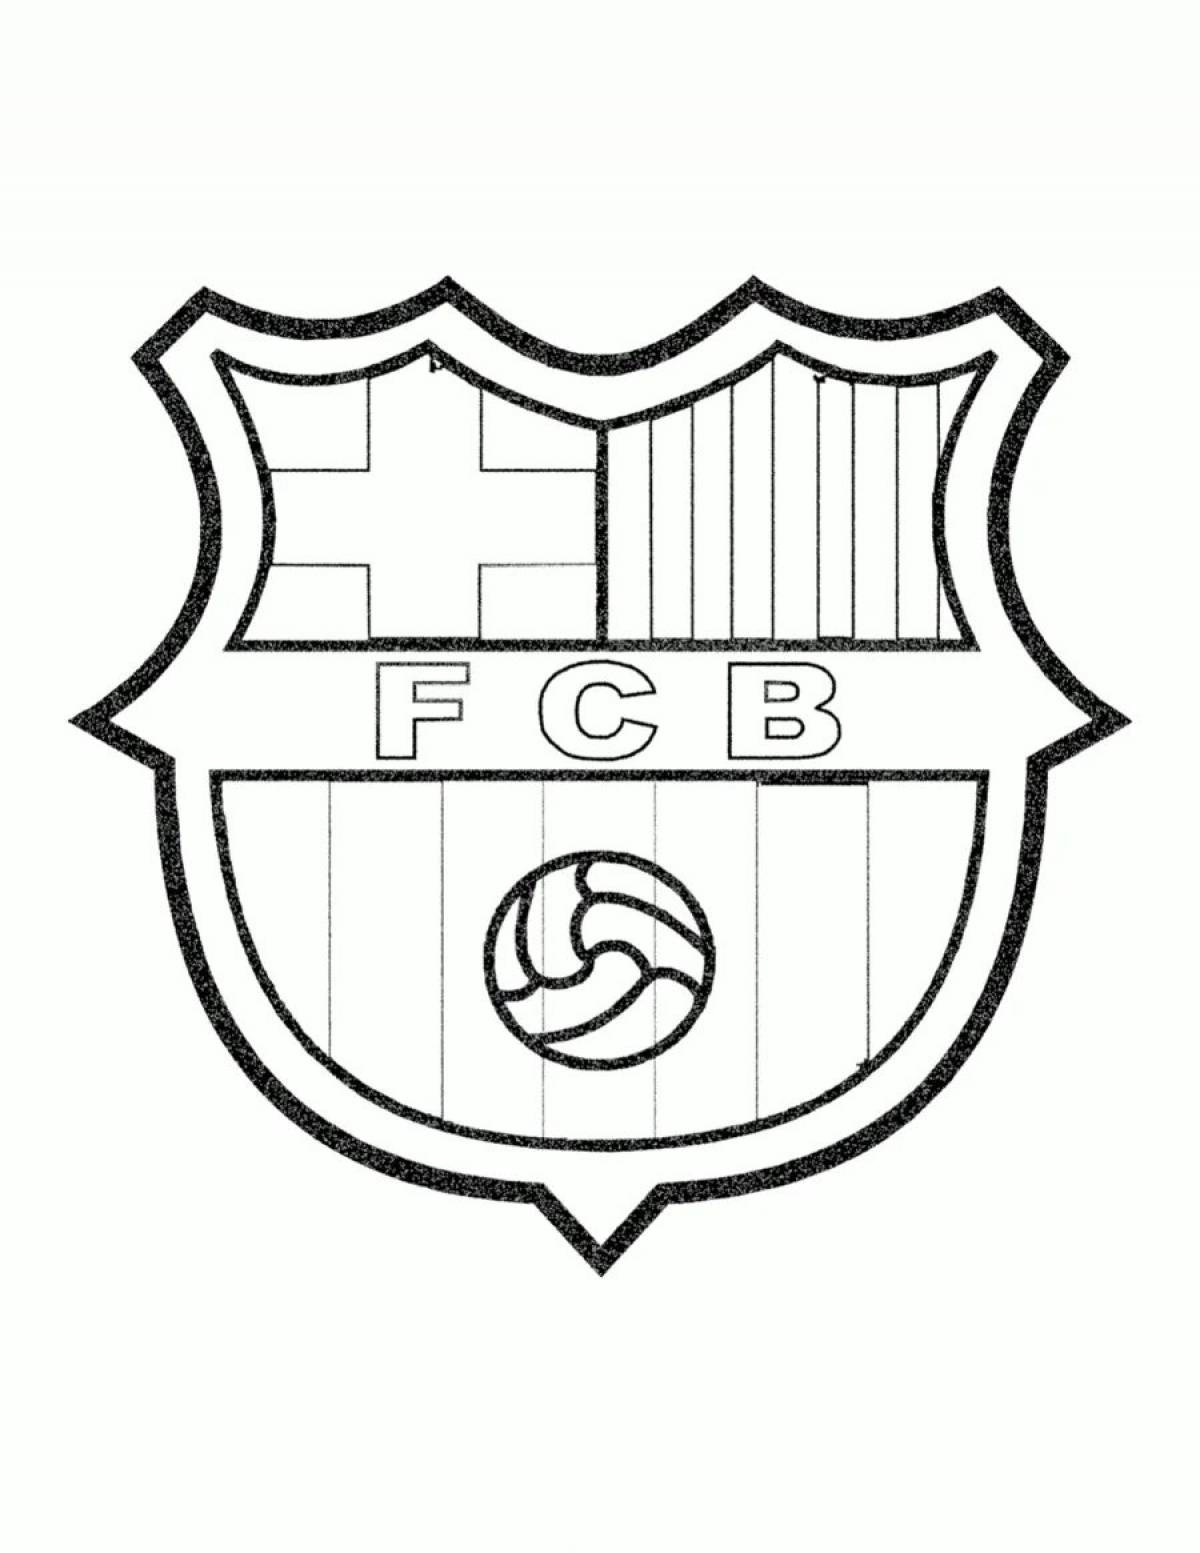 Barcelona emblem #5